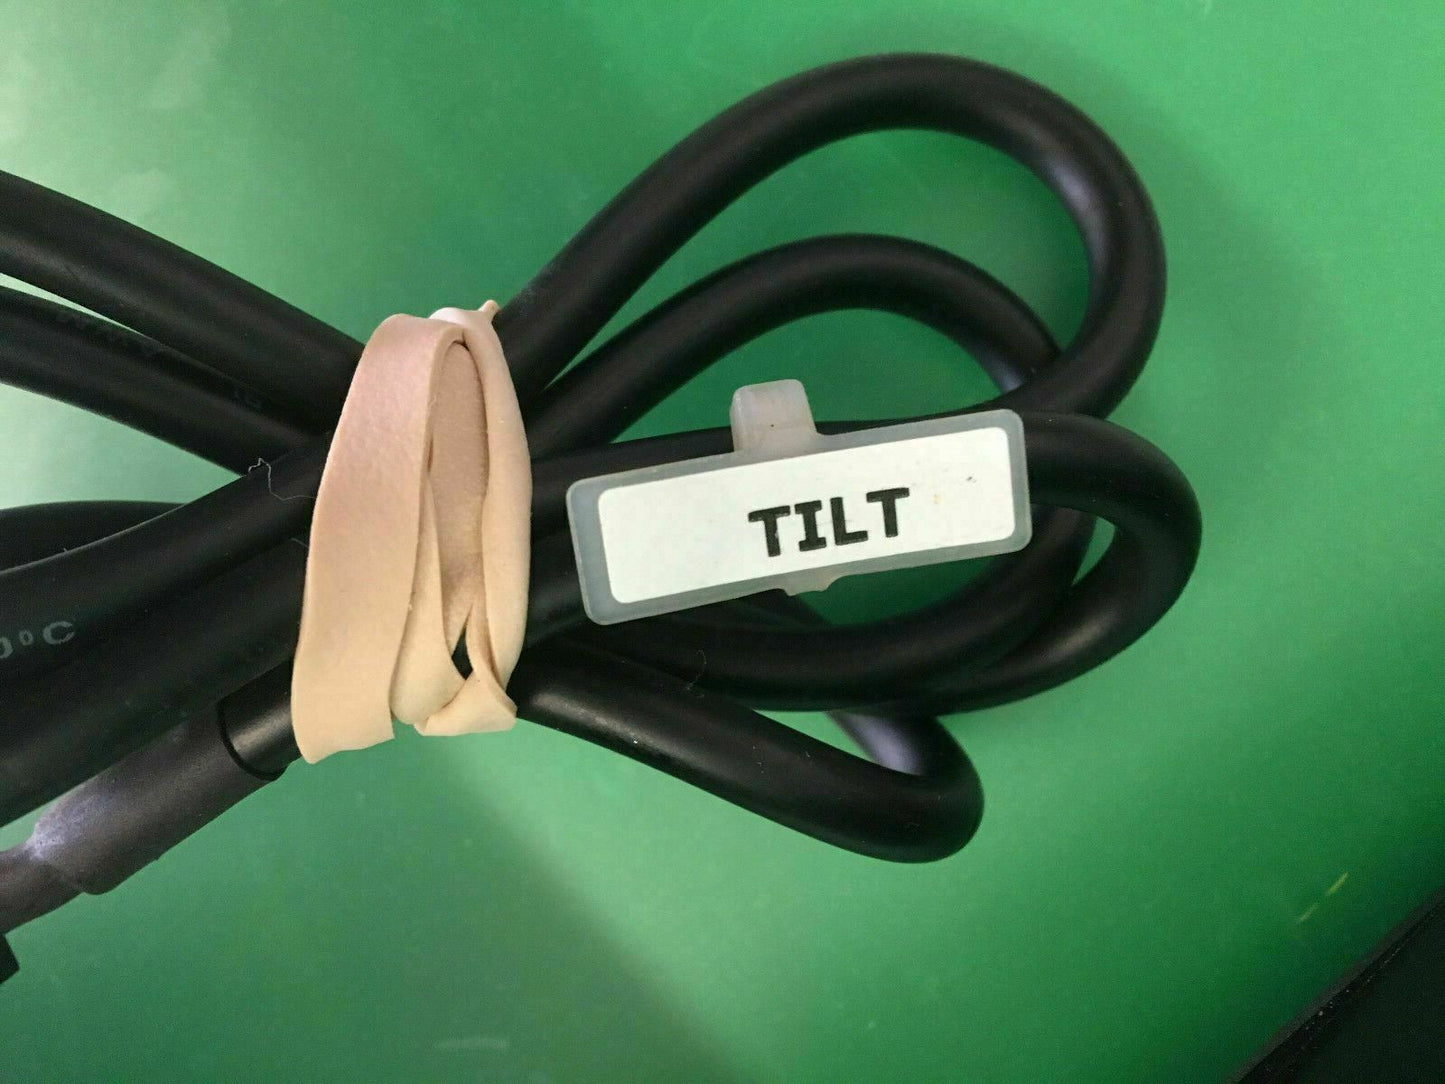 Tilt Actuator Linak Model # ACCACTR 1031 for Quantum 600 Powerchair #C697